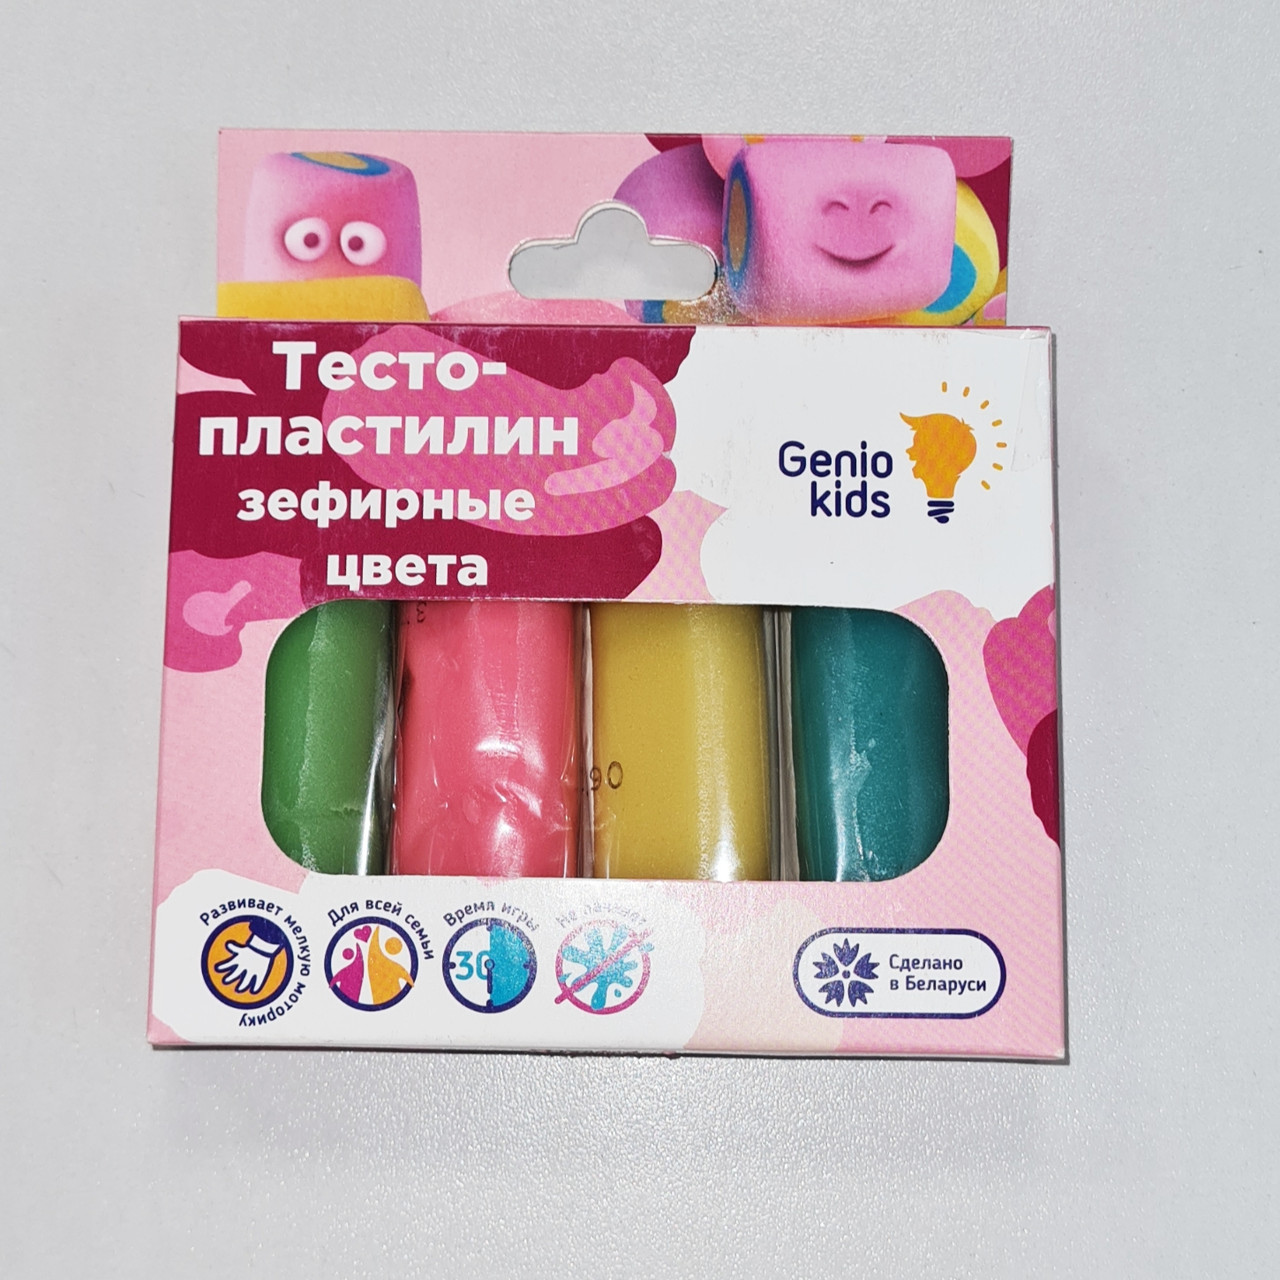 Тесто-пластилин Genio Kids Набор "4 цвета. маршмеллоу», 120гр, арт. TA1088V